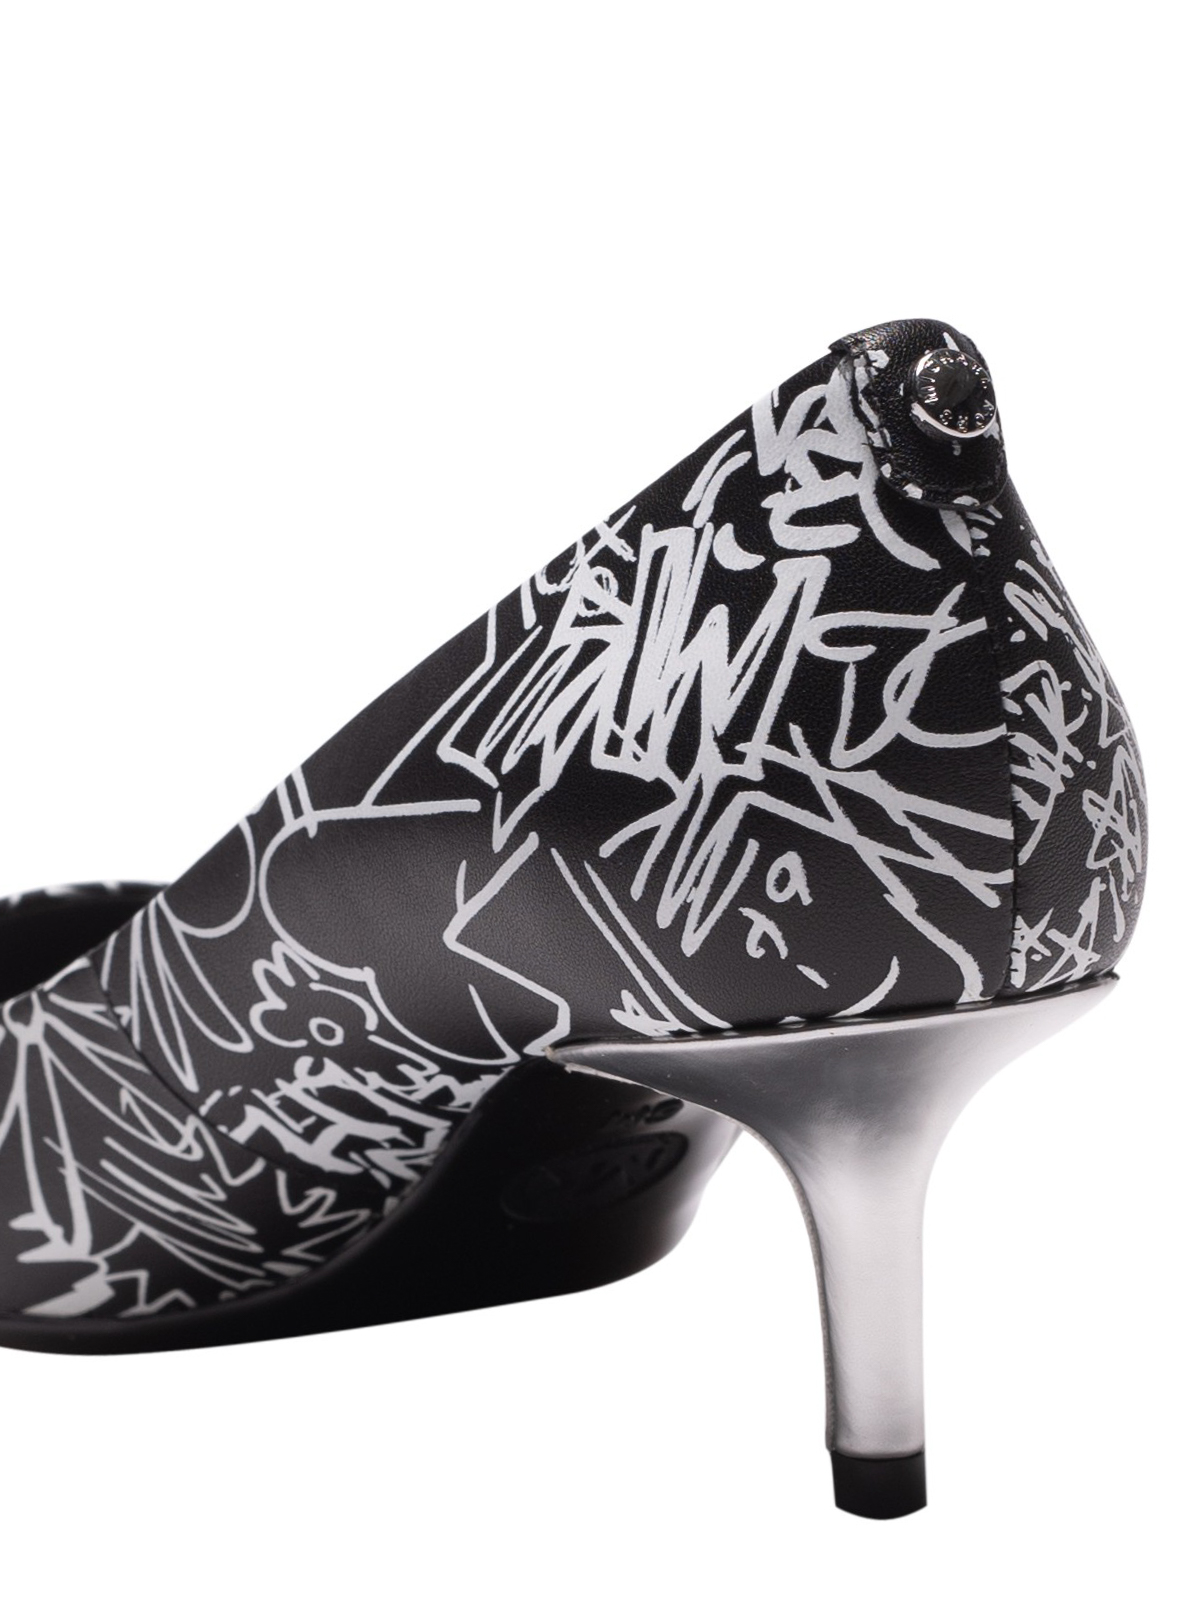 Court shoes Michael Kors - Flex graffiti printed leather kitten pumps -  40T8MFMP1W002